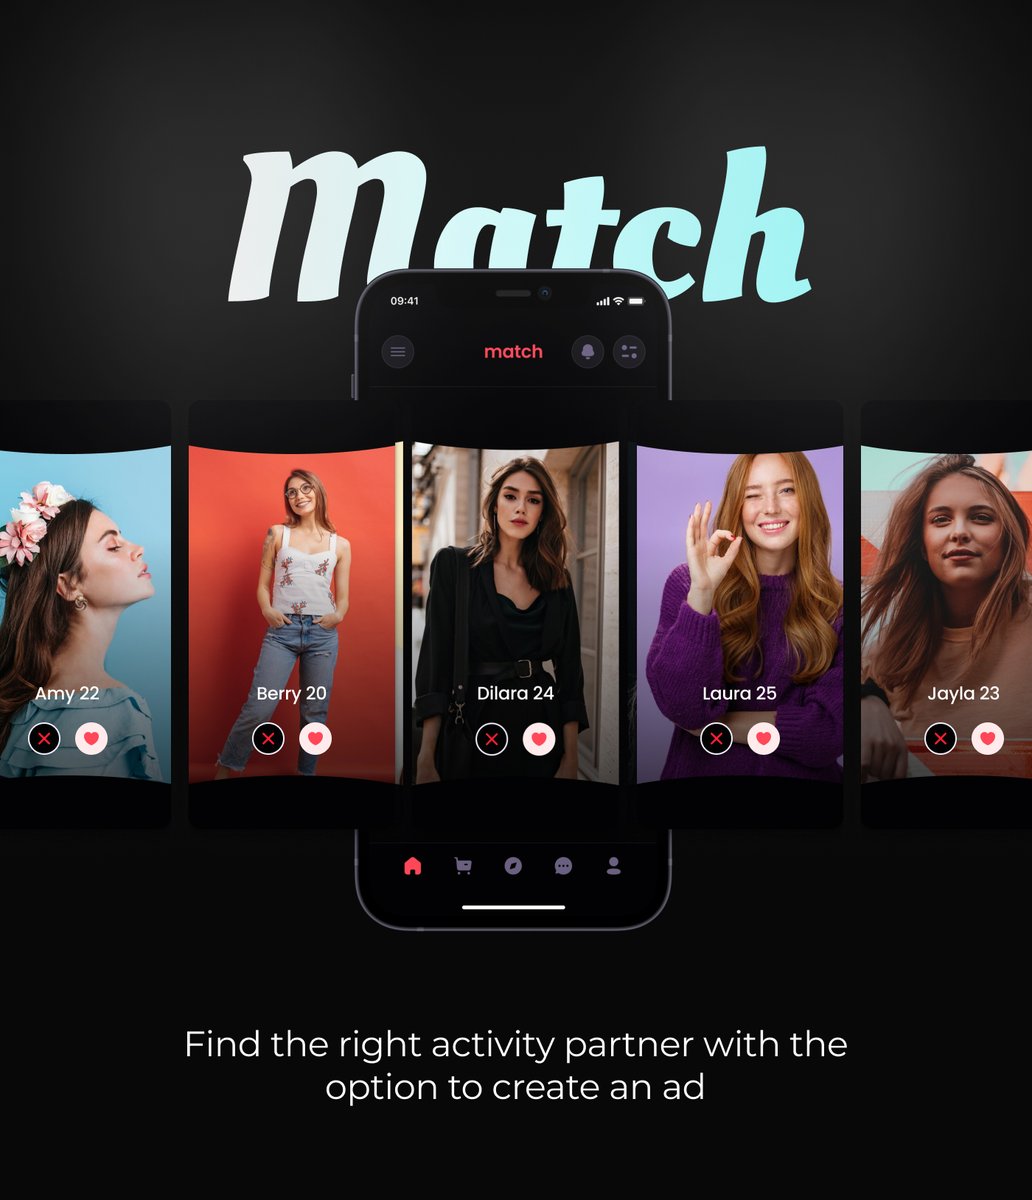 Option to create activity ads with Match App
#App #figma #uiuxdesign #mobil #design #landingpage